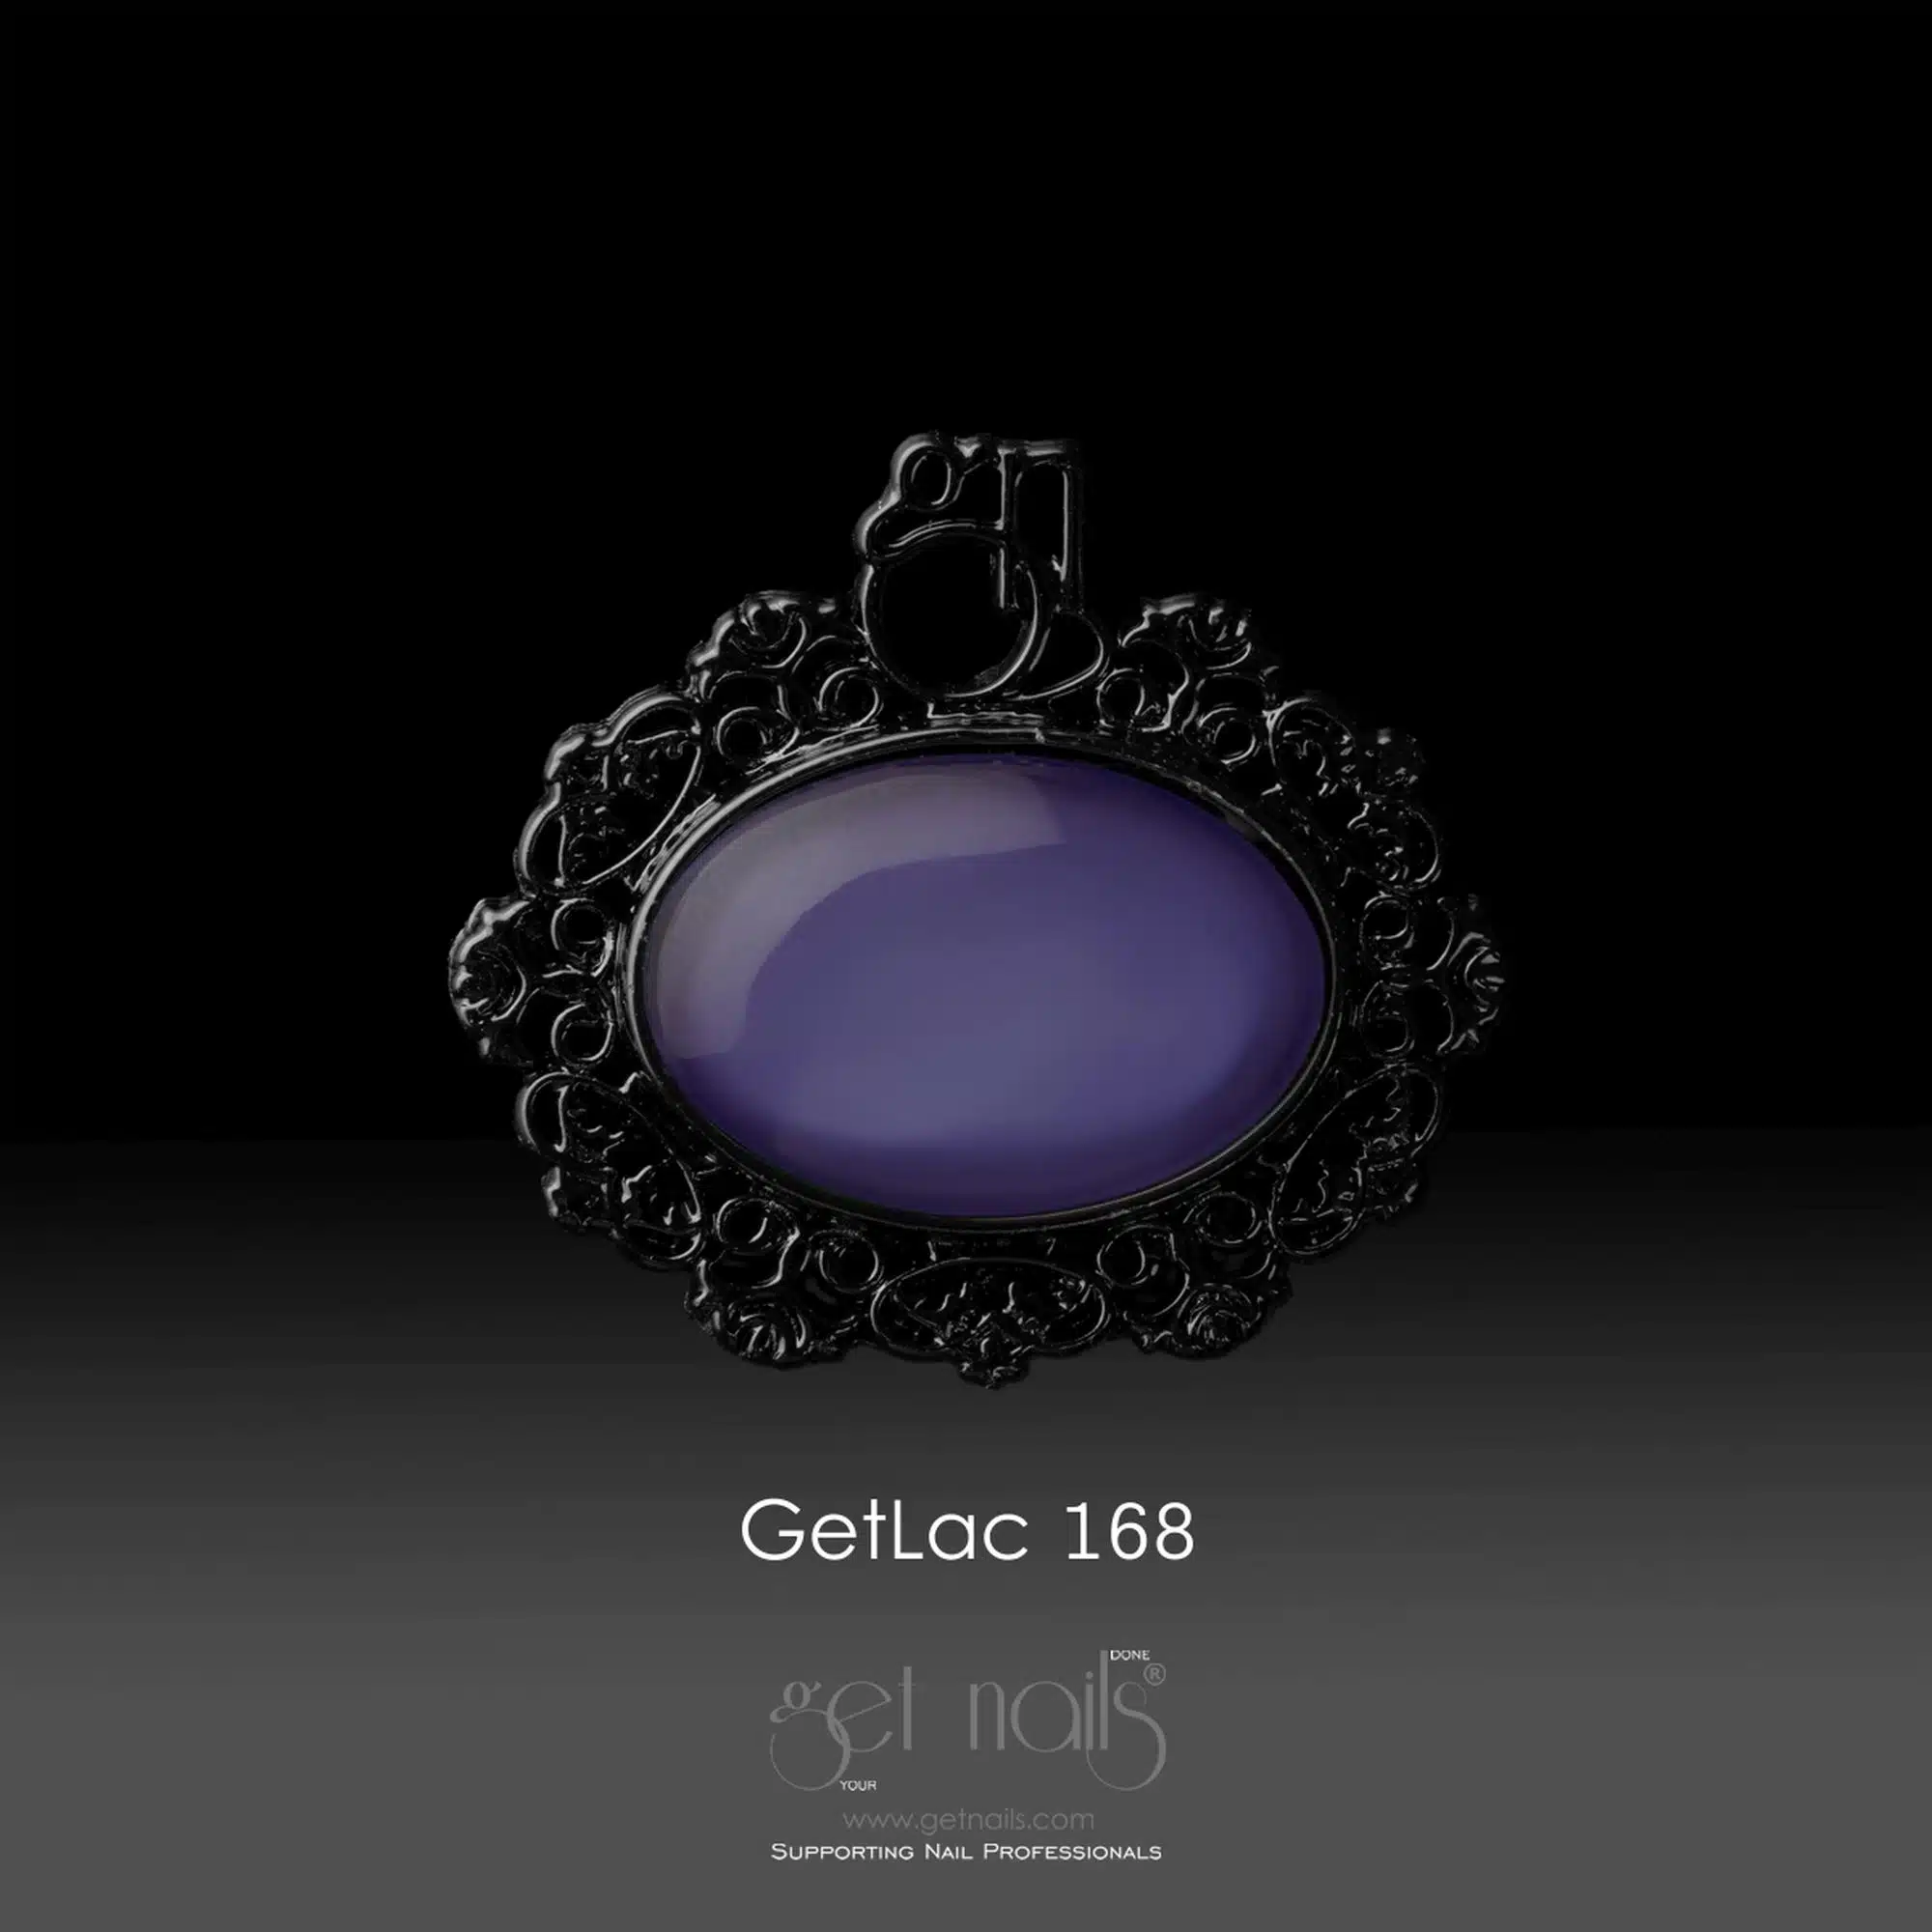 Get Nails Austria - GetLac 168 15г